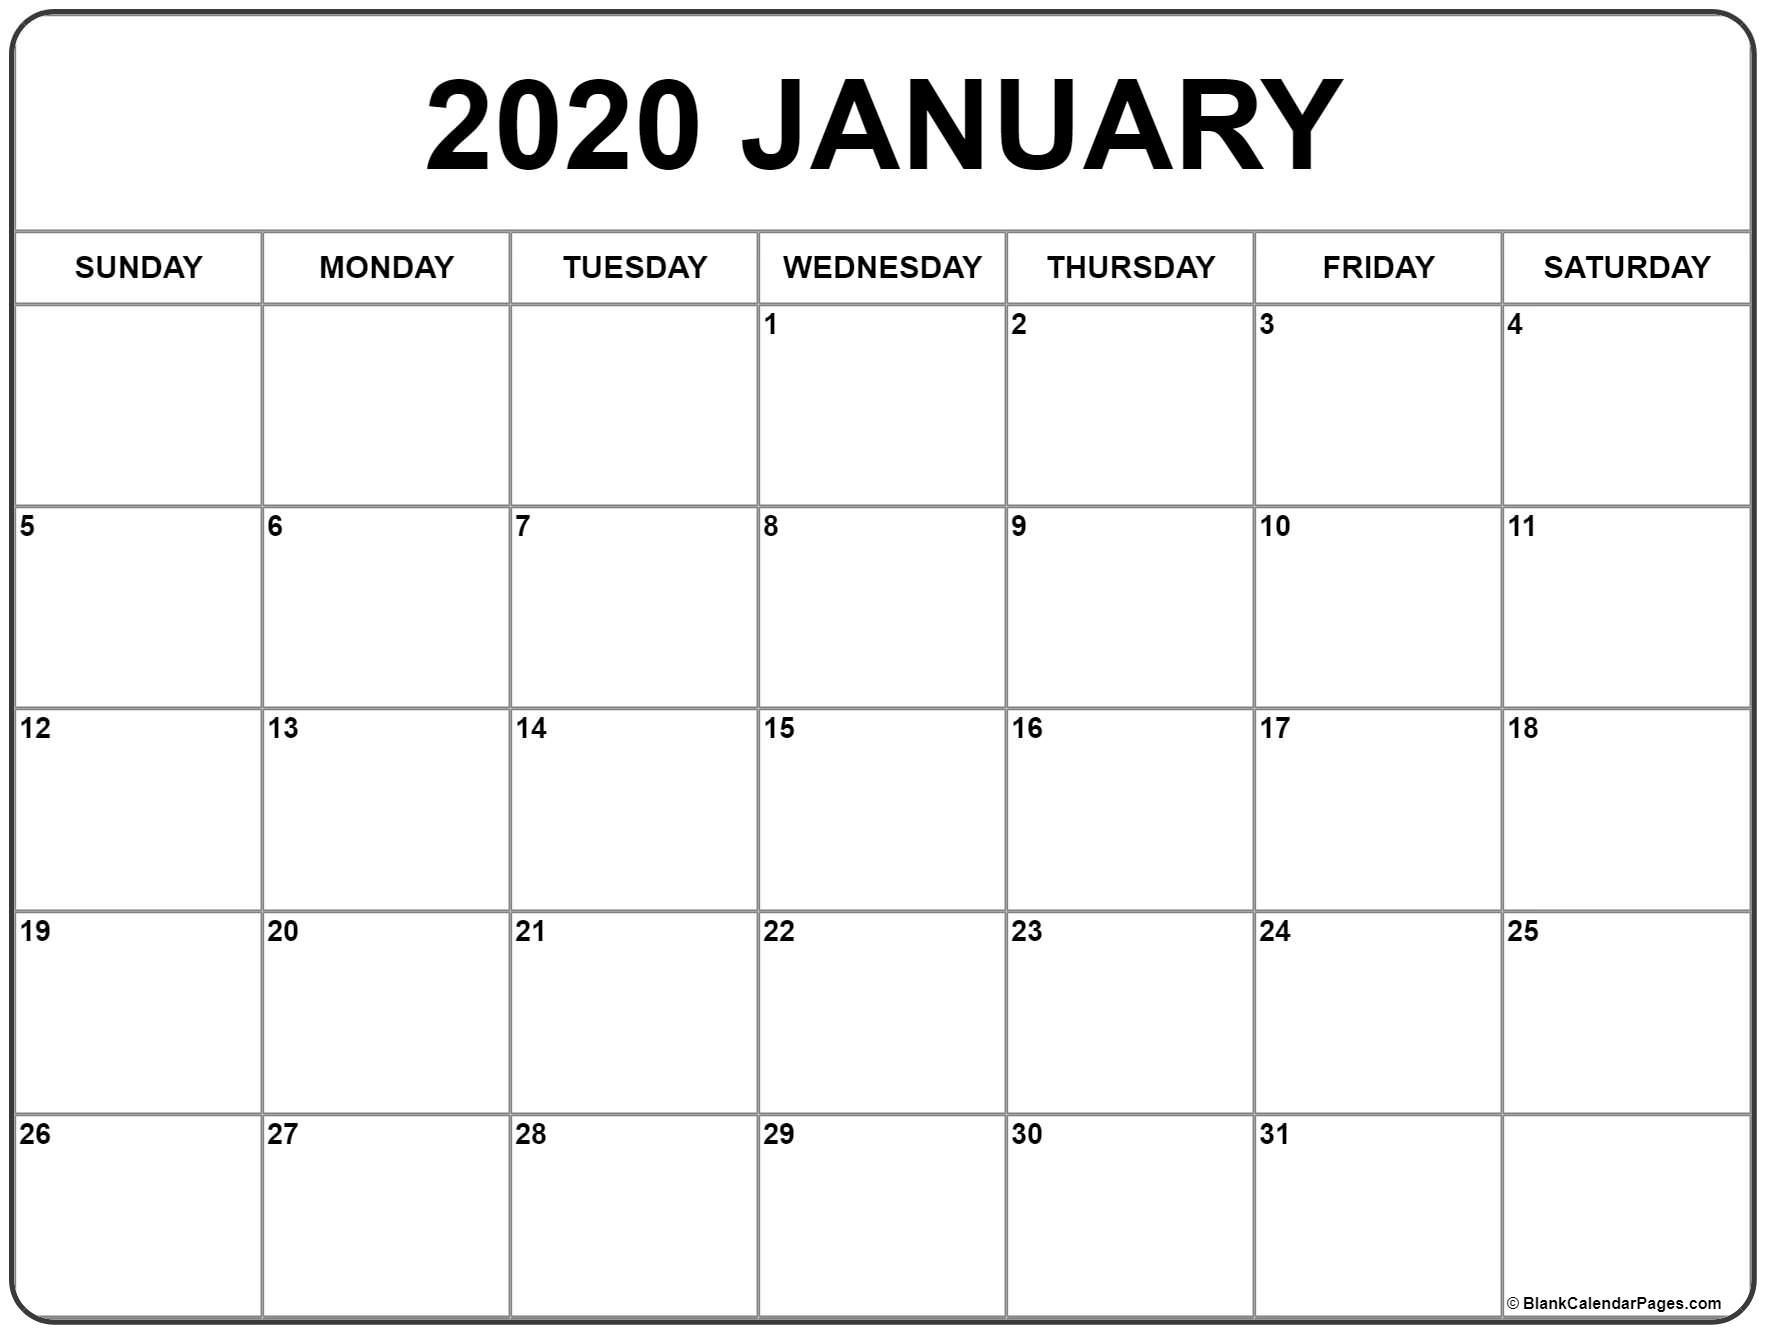 January 2020 Calendar | Free Printable Monthly Calendars-Blank Monthly Calendar Printable 2020 Monday Start